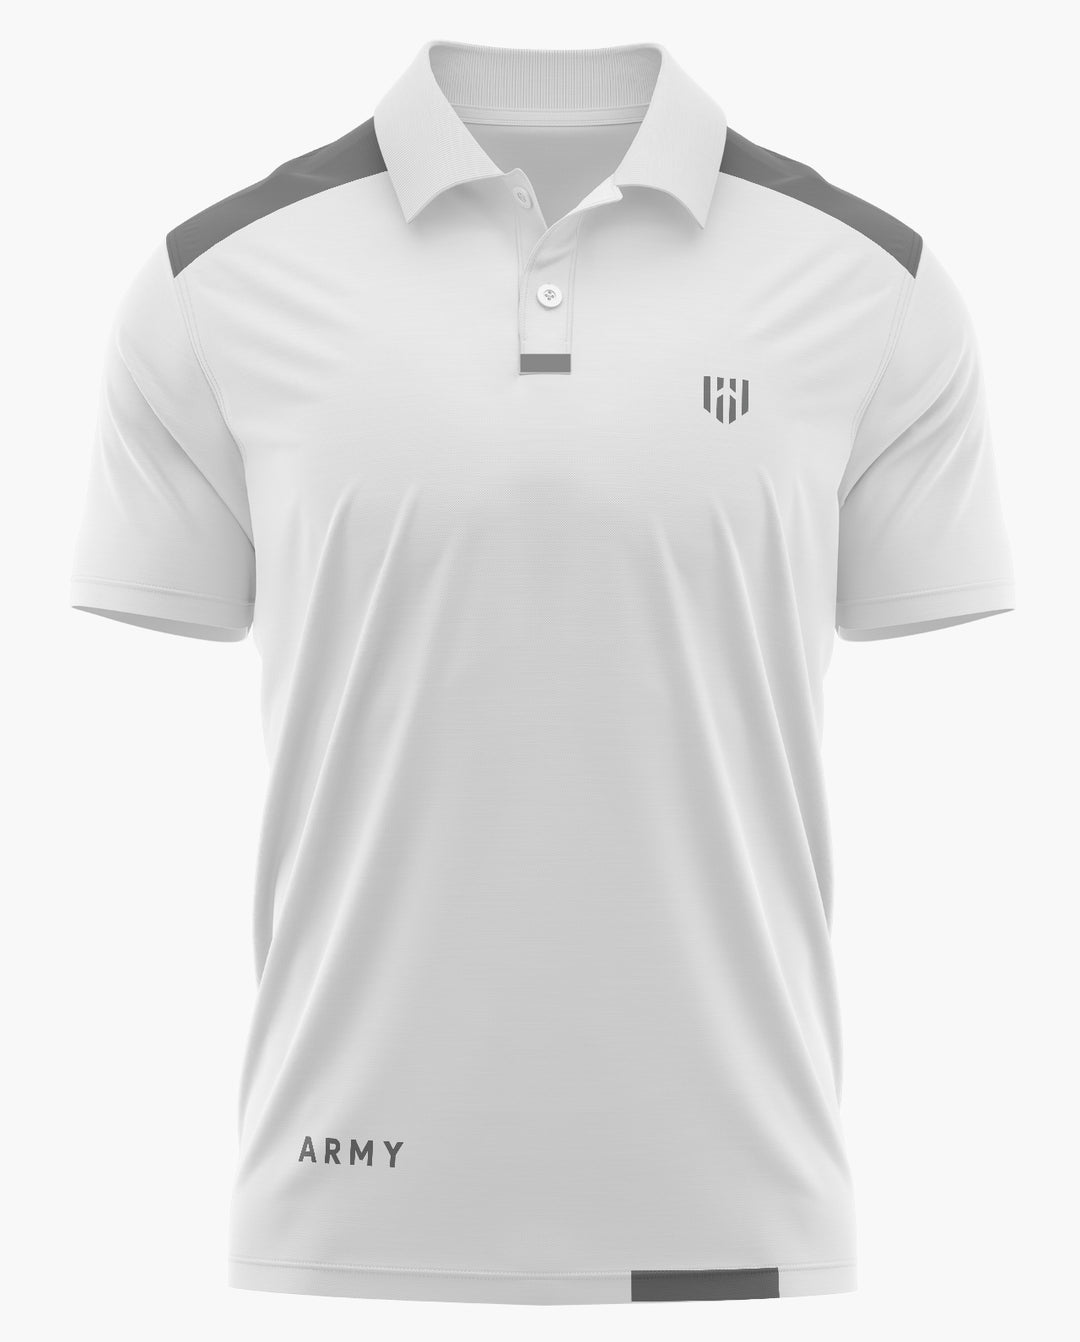 ARMY POLO T-Shirt - Aero Armour